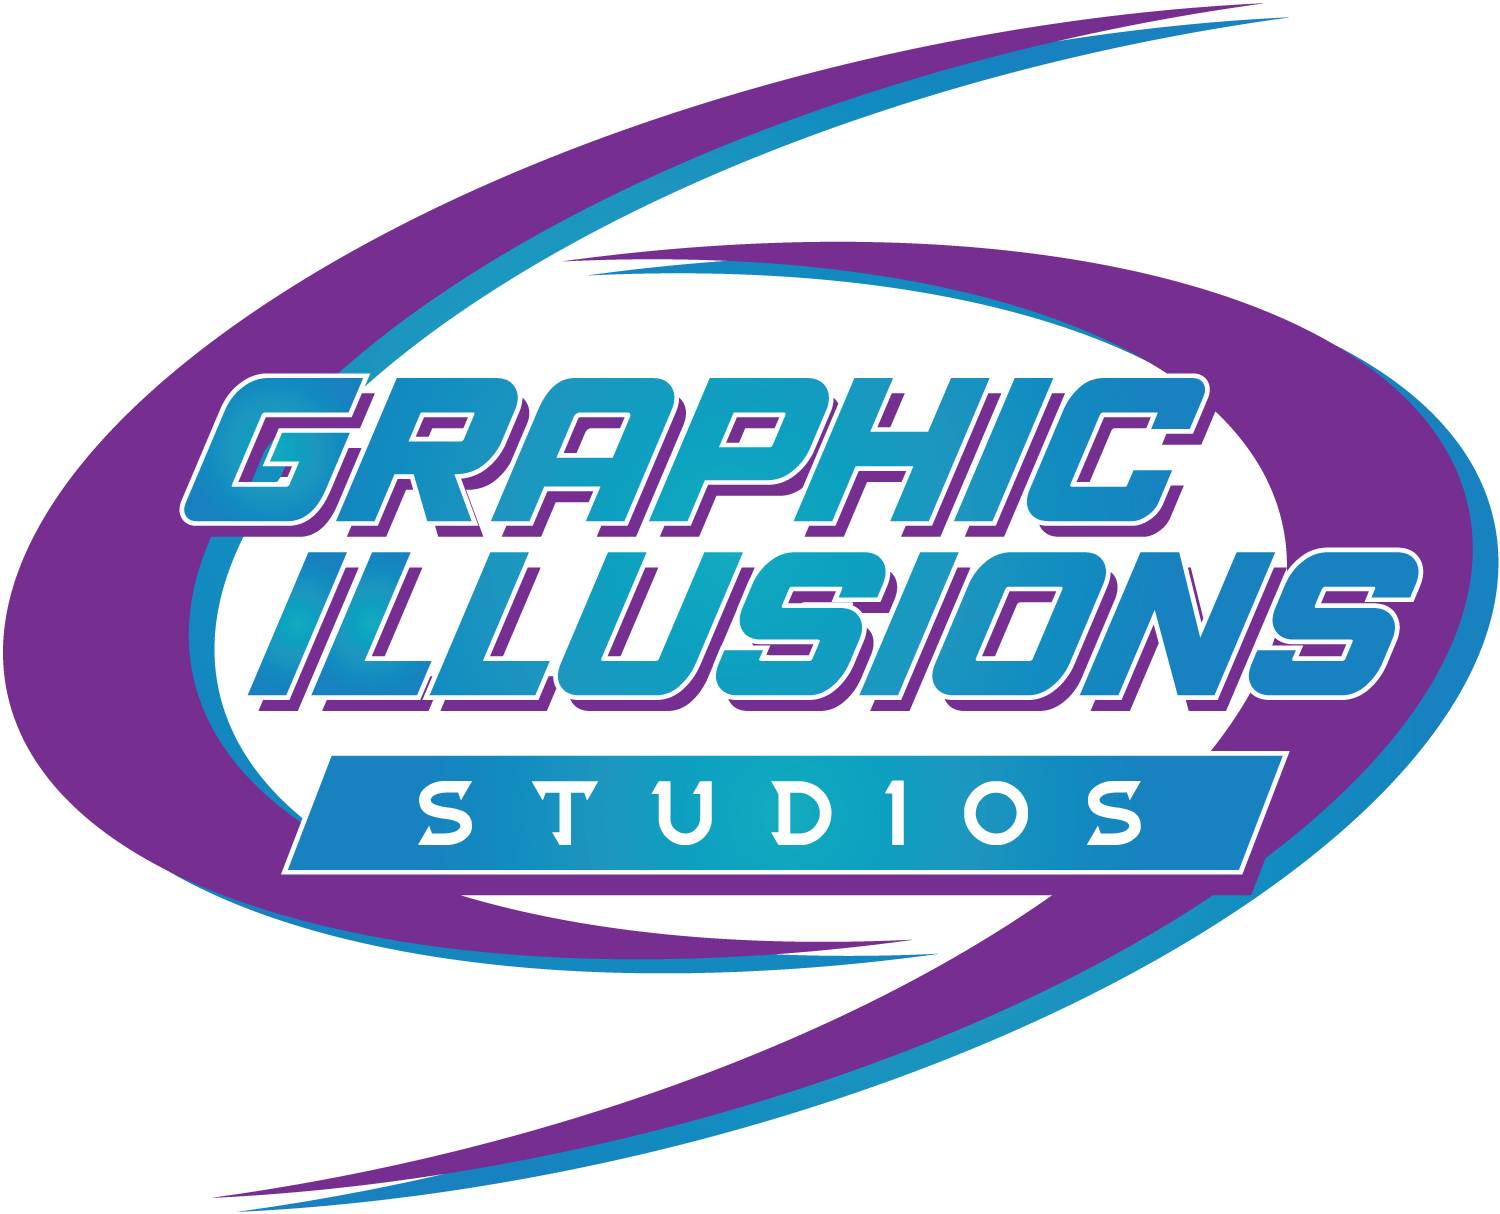 Graphic Illusiosns Studios Home